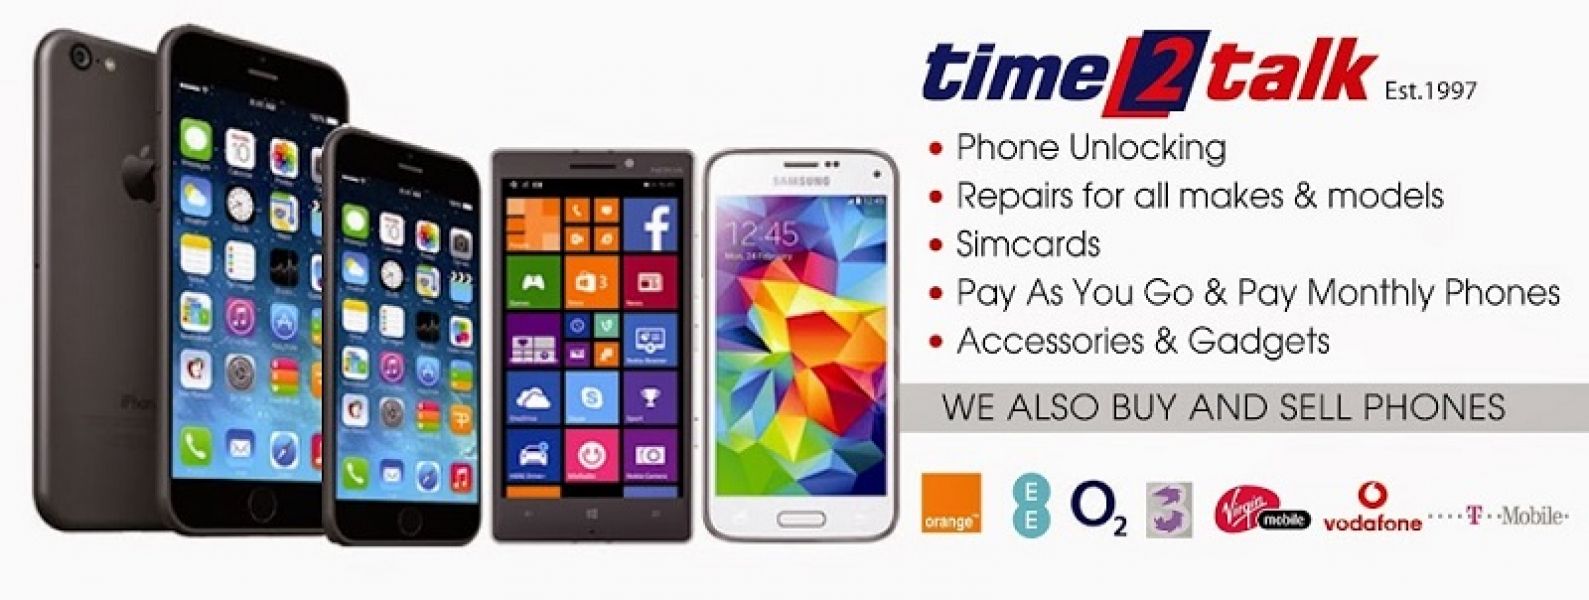 Time2talk Swansea iPhone & iPad repair